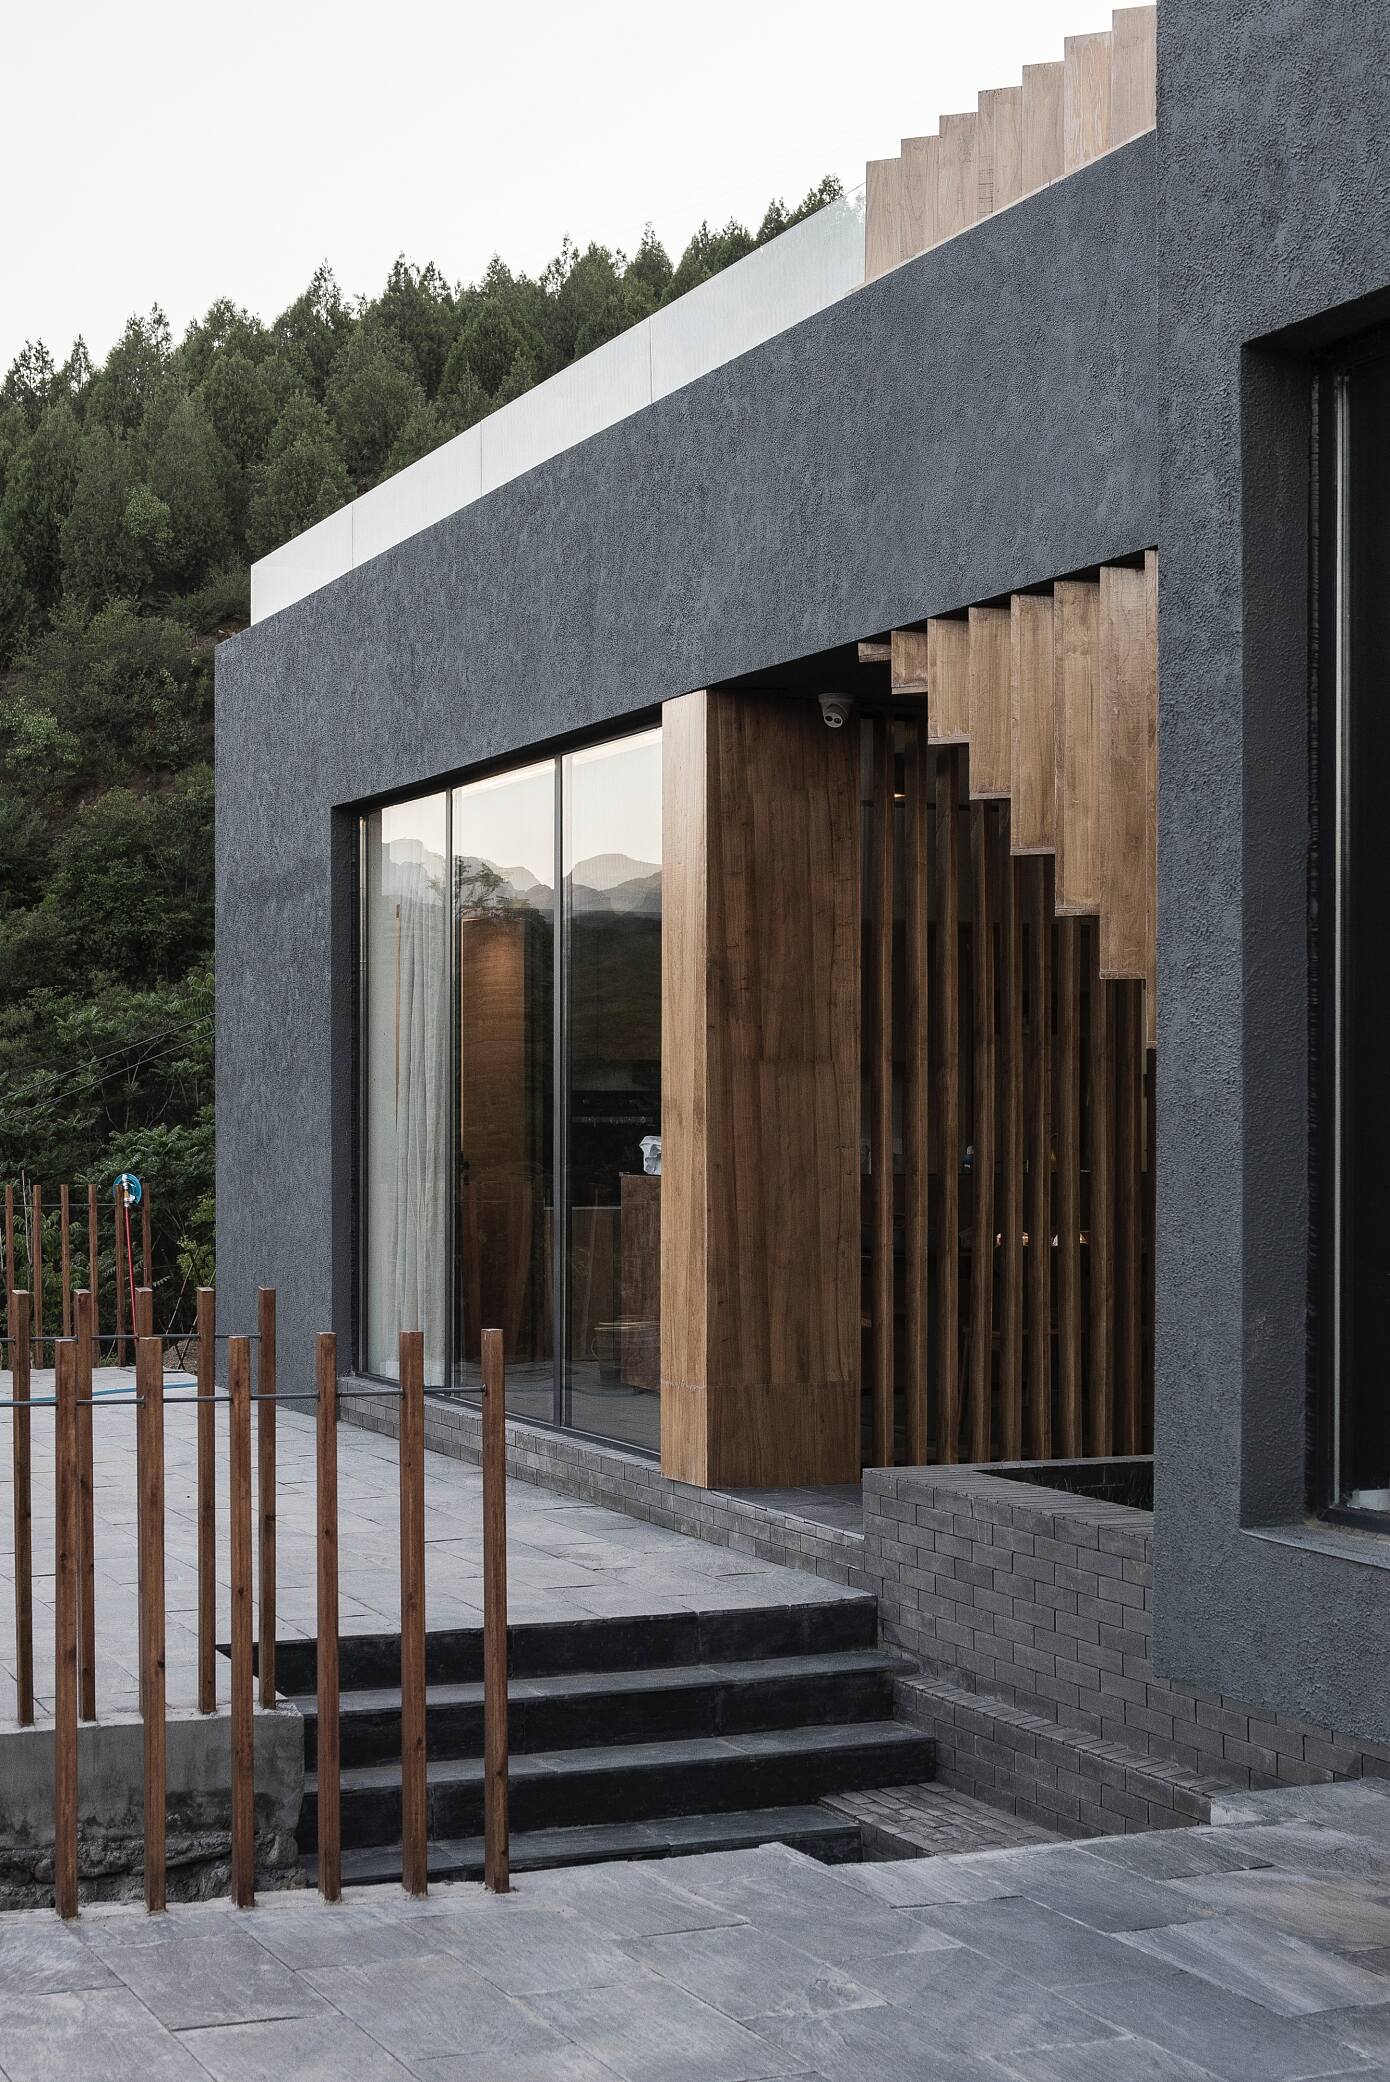 Donghulin Guest House by Fon Studio